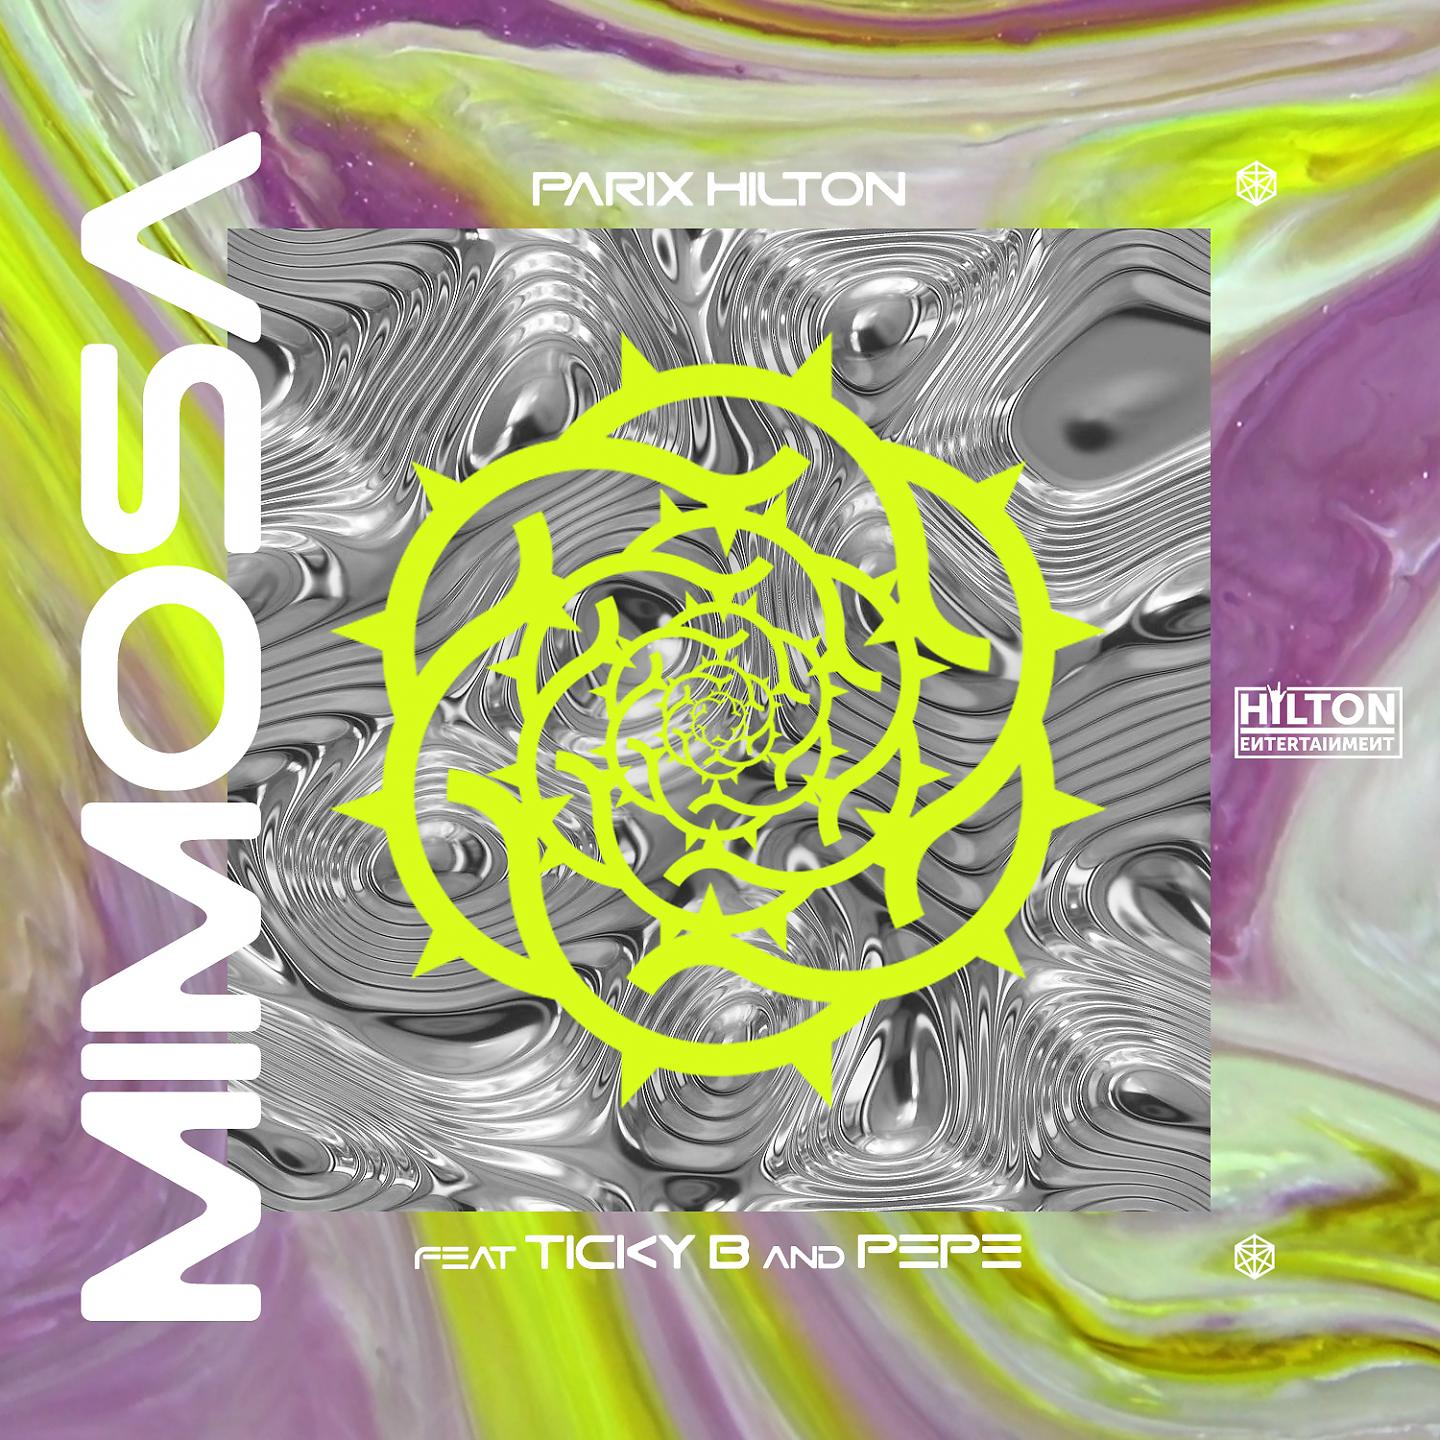 Постер альбома Mimosa